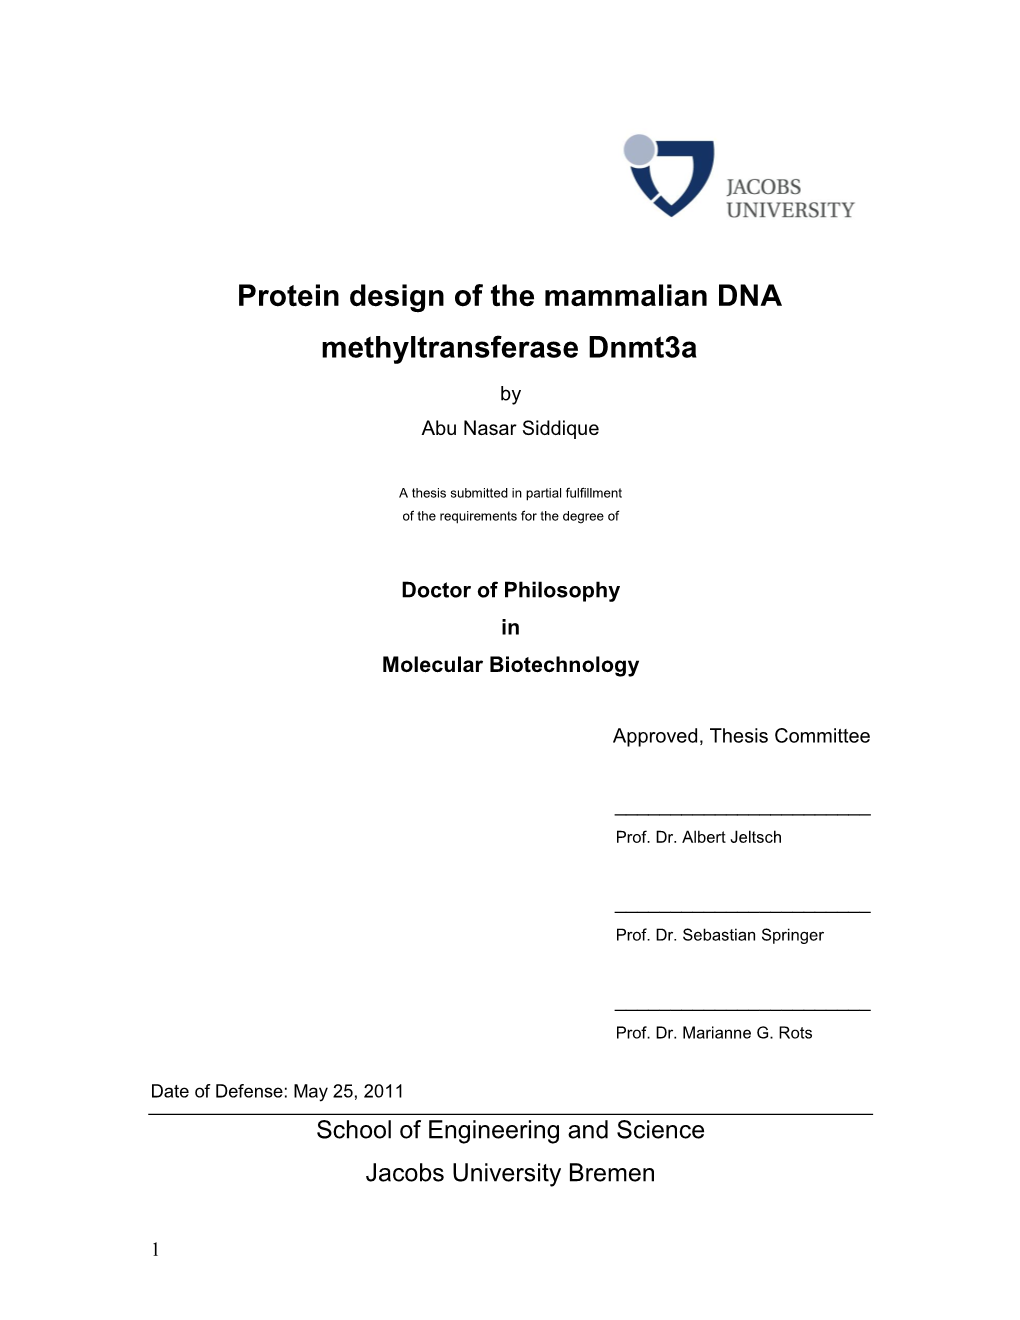 Protein Design of the Mammalian DNA Methyltransferase Dnmt3a